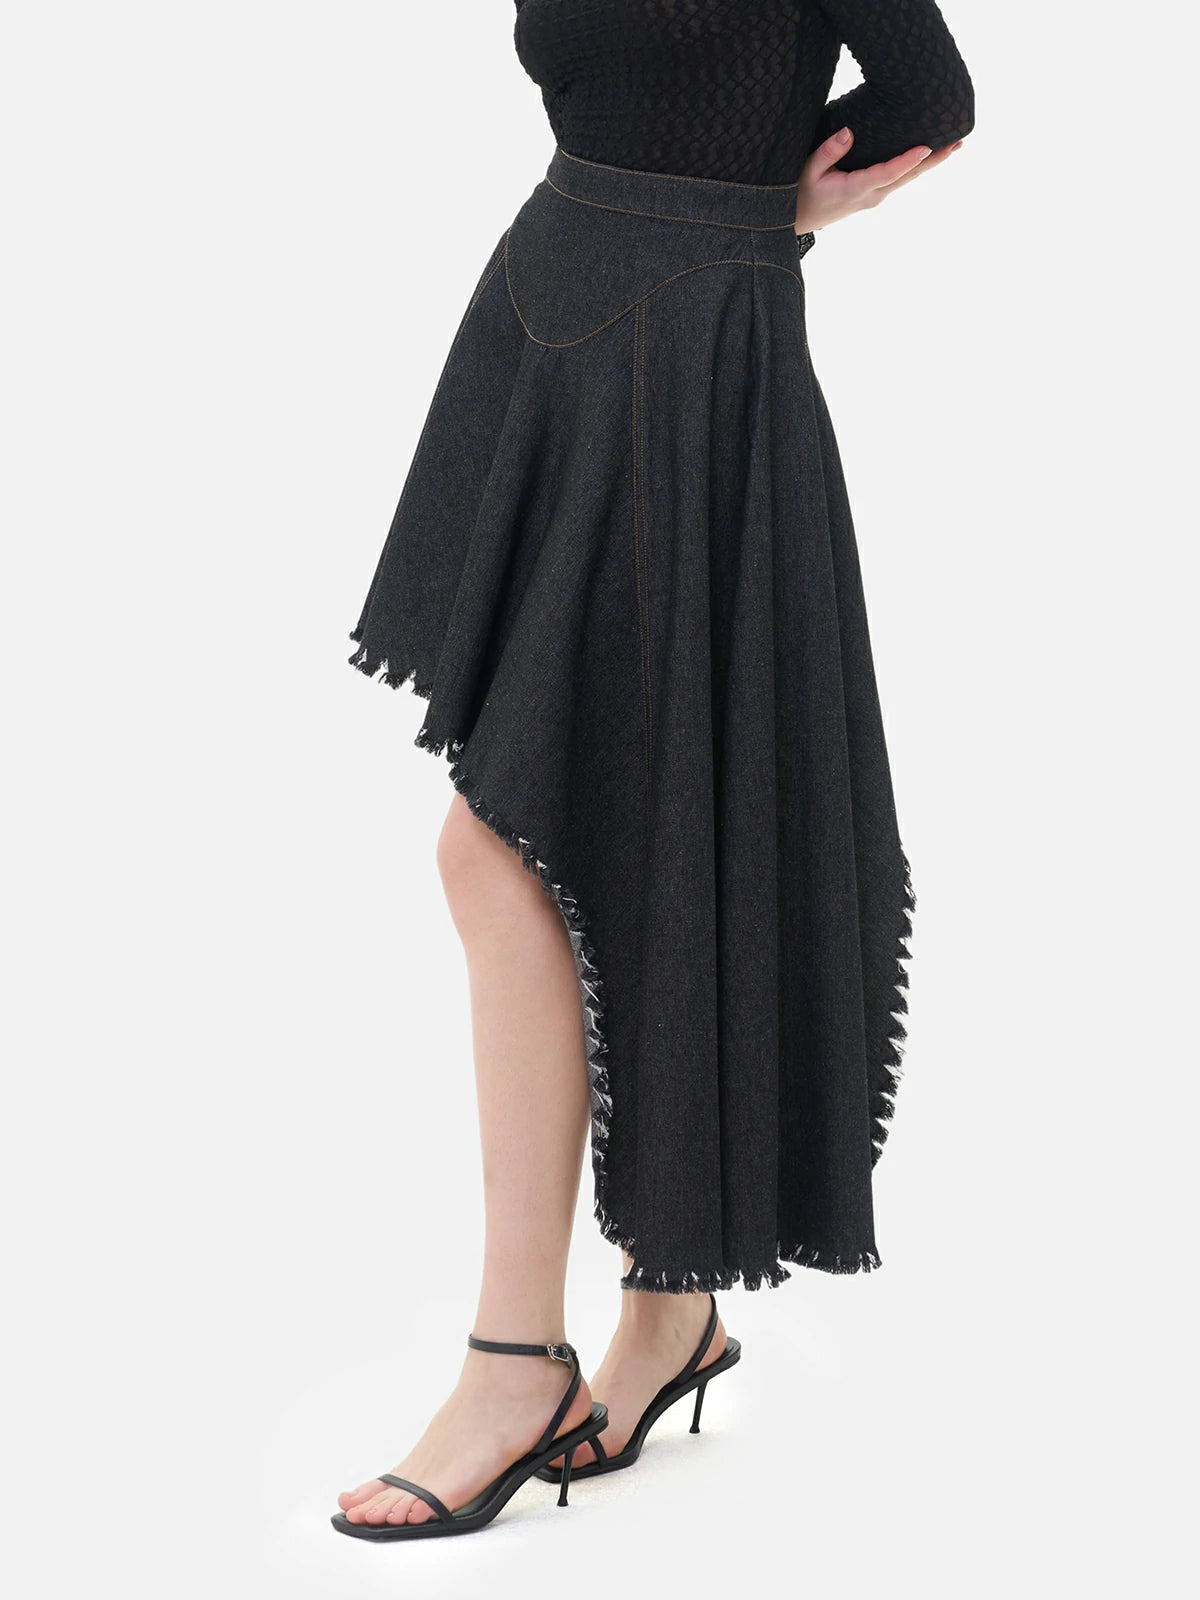 Fashionable design with frayed edge on the hem denim skirt